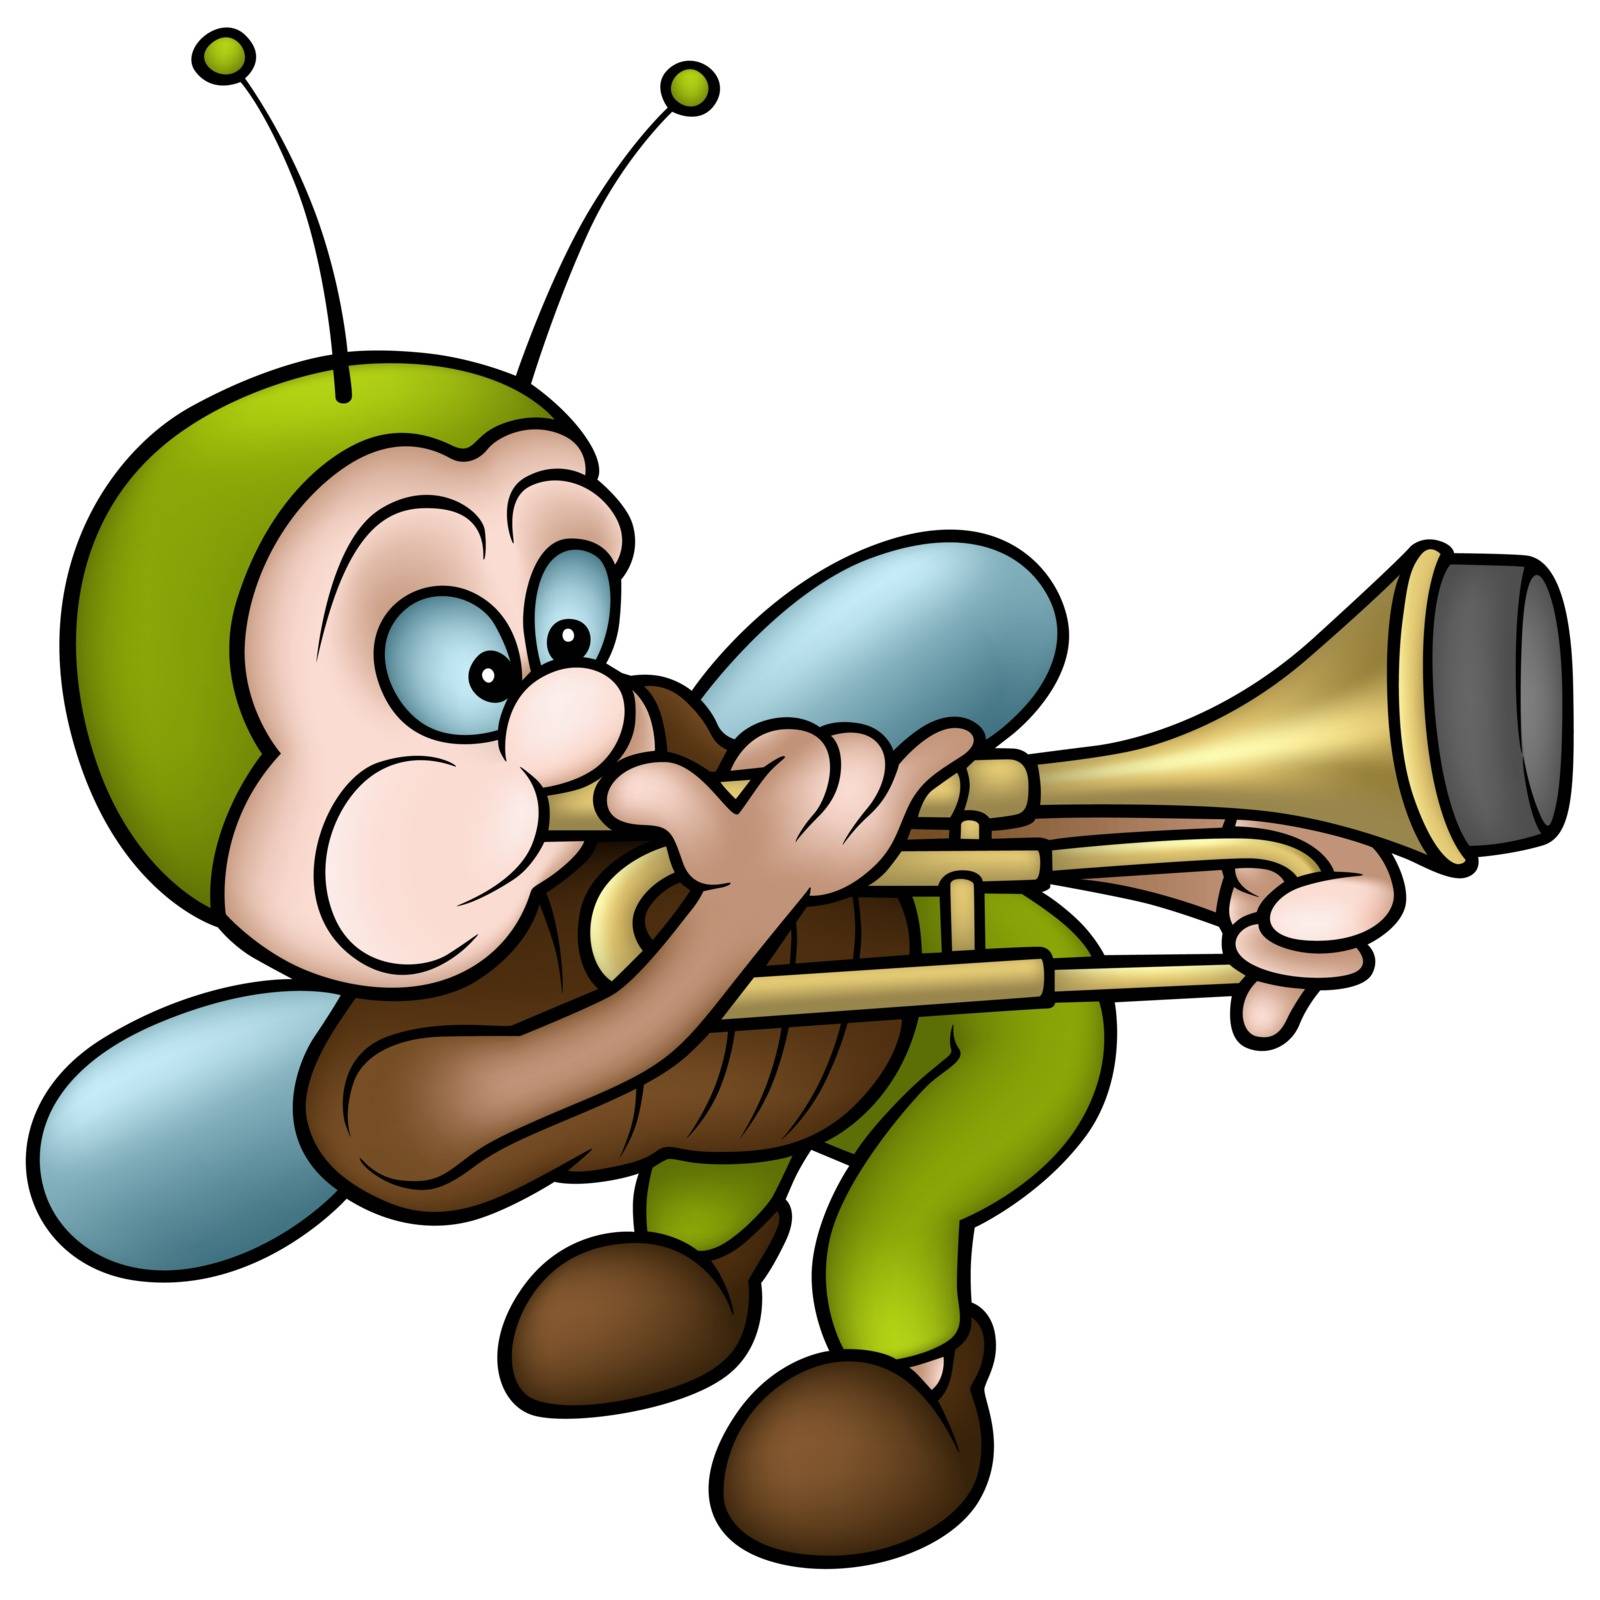 Bug And Trombone - Colored Cartoon Illustration, Vector